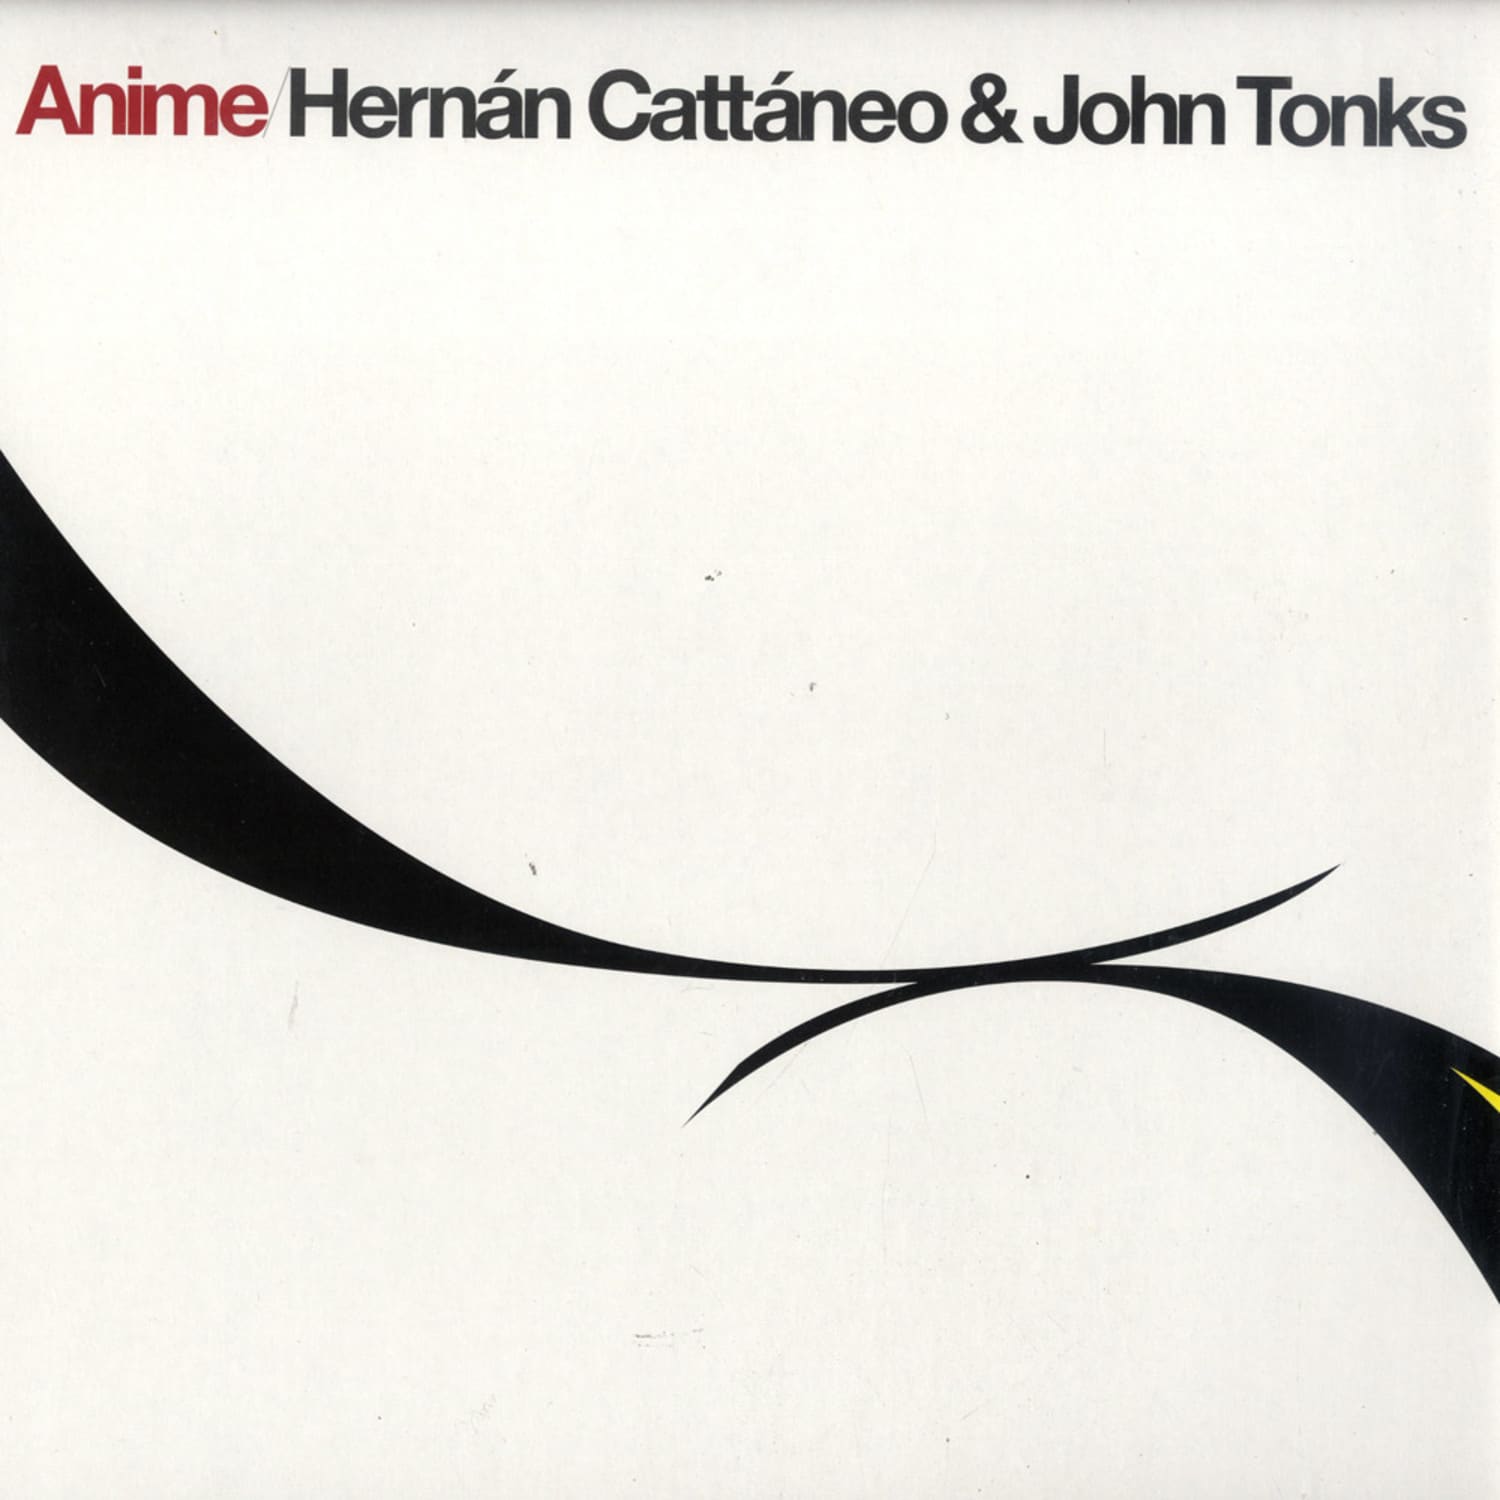 Hernan Cattaneo & John Tonks - ANIME 